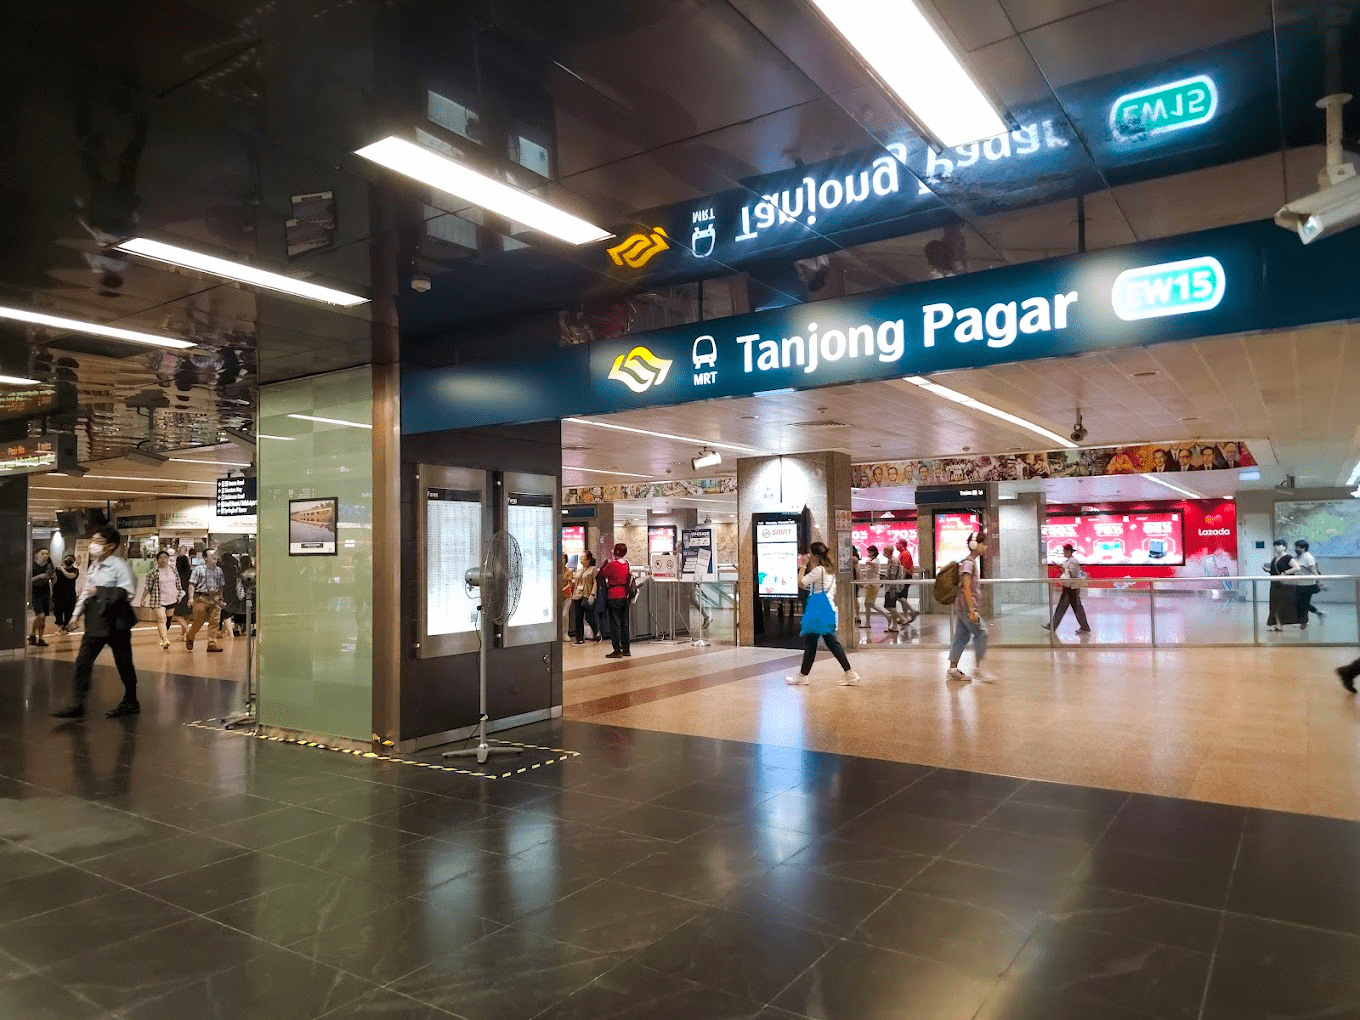 MRT Hacks - Tanjong Pagar MRT station